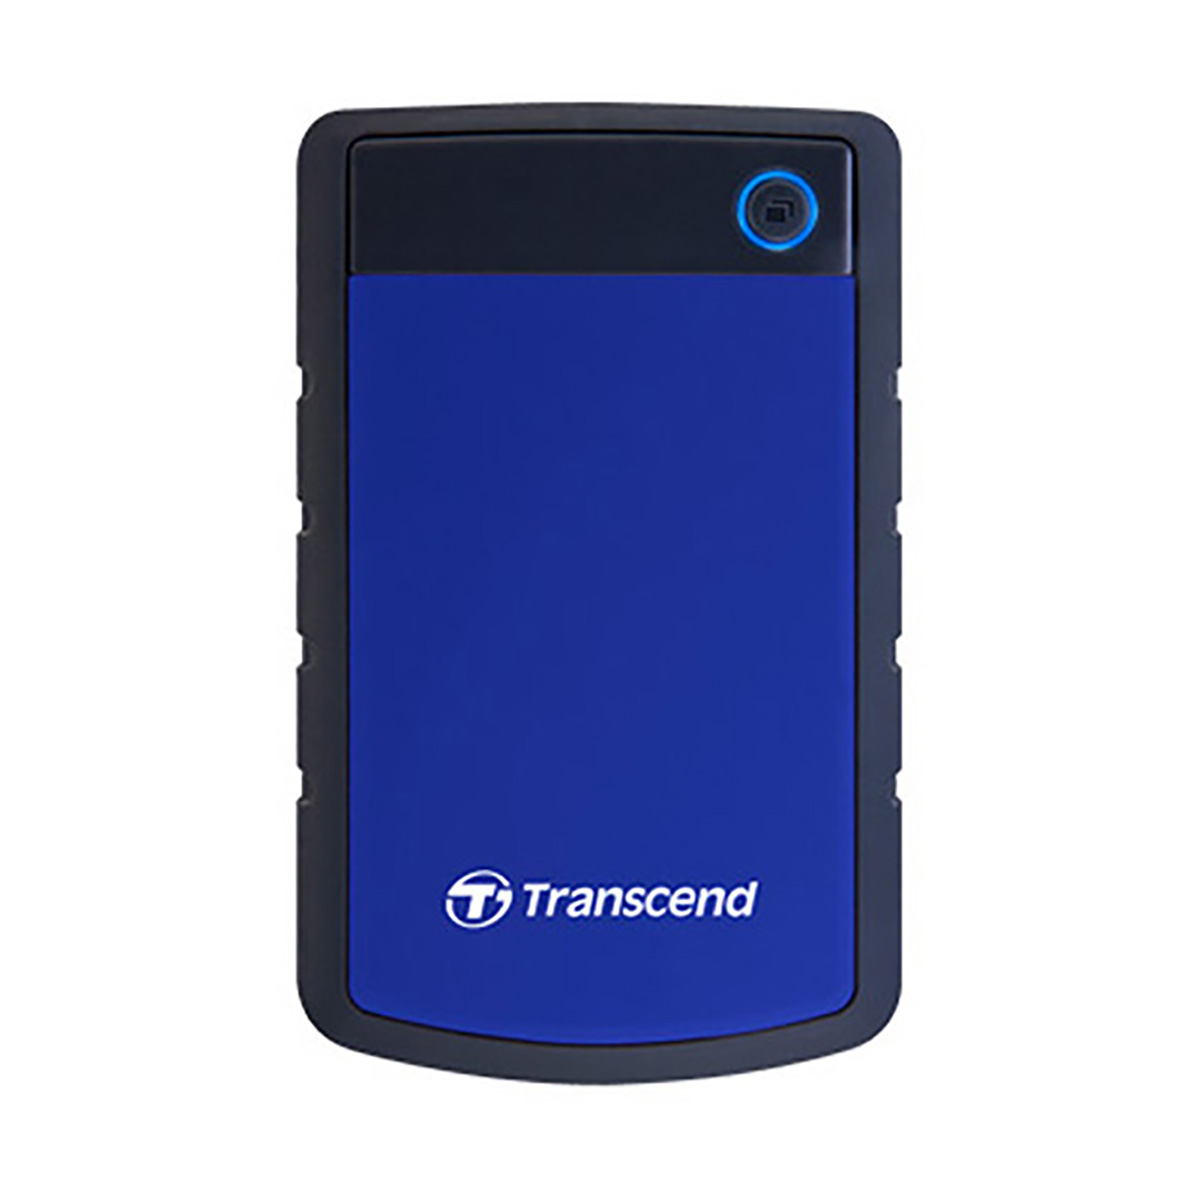 Transcend 25H3B 4TB blau portable Festplatte